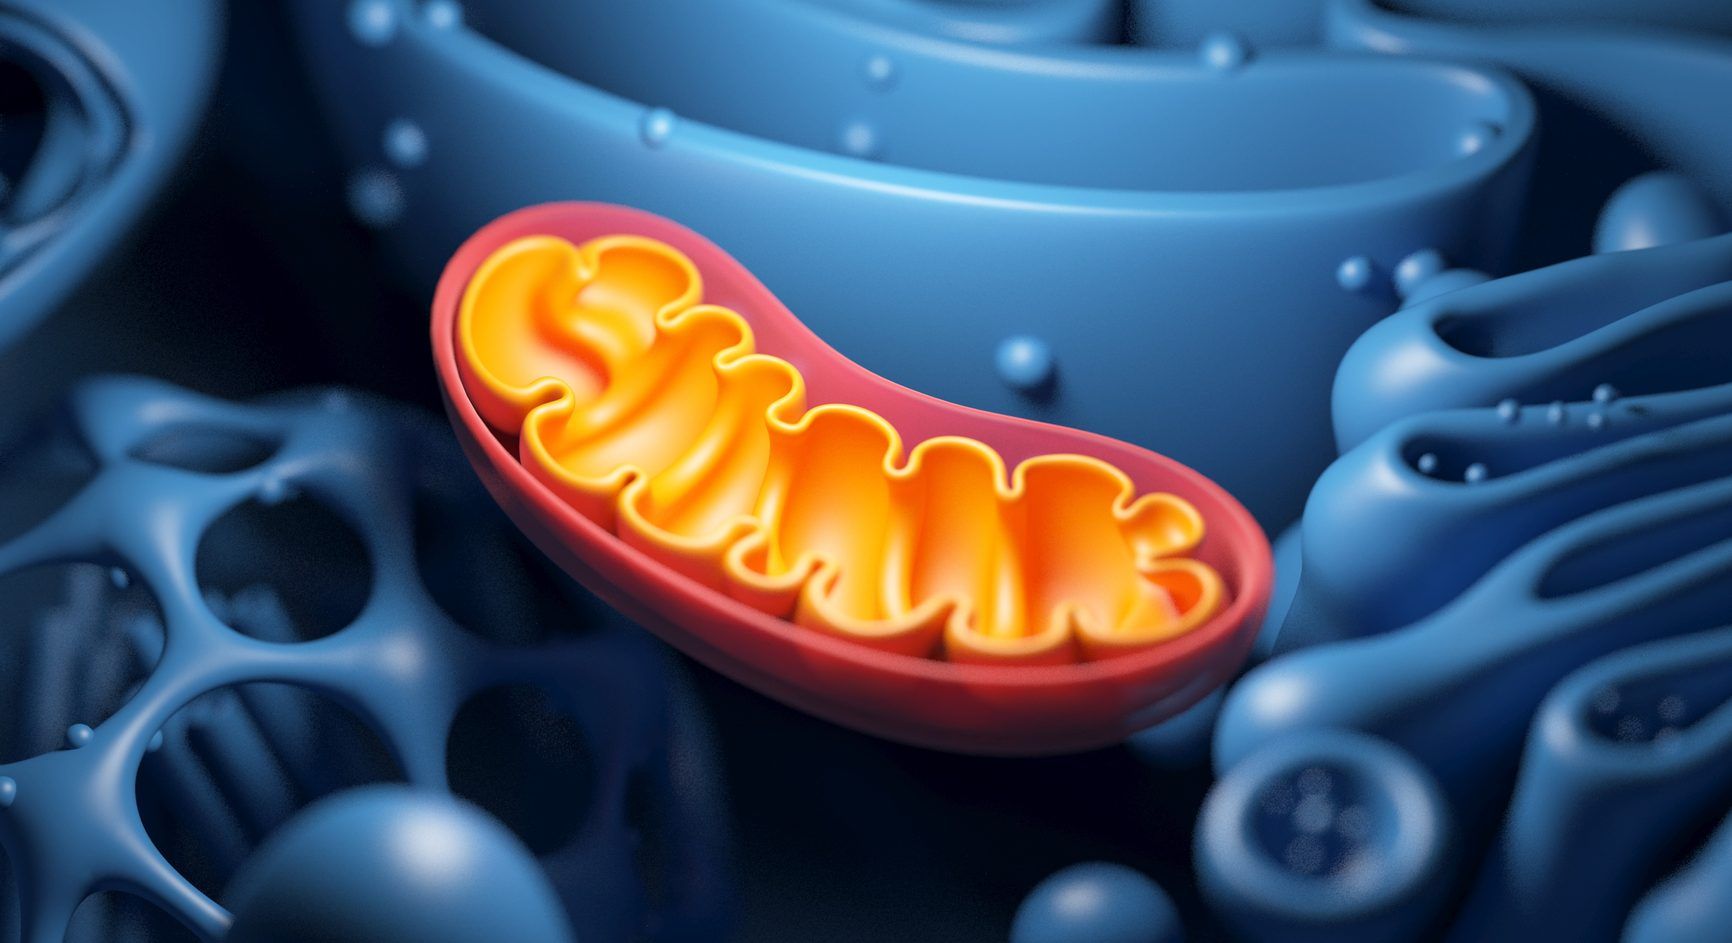 An illustration of mitochondria